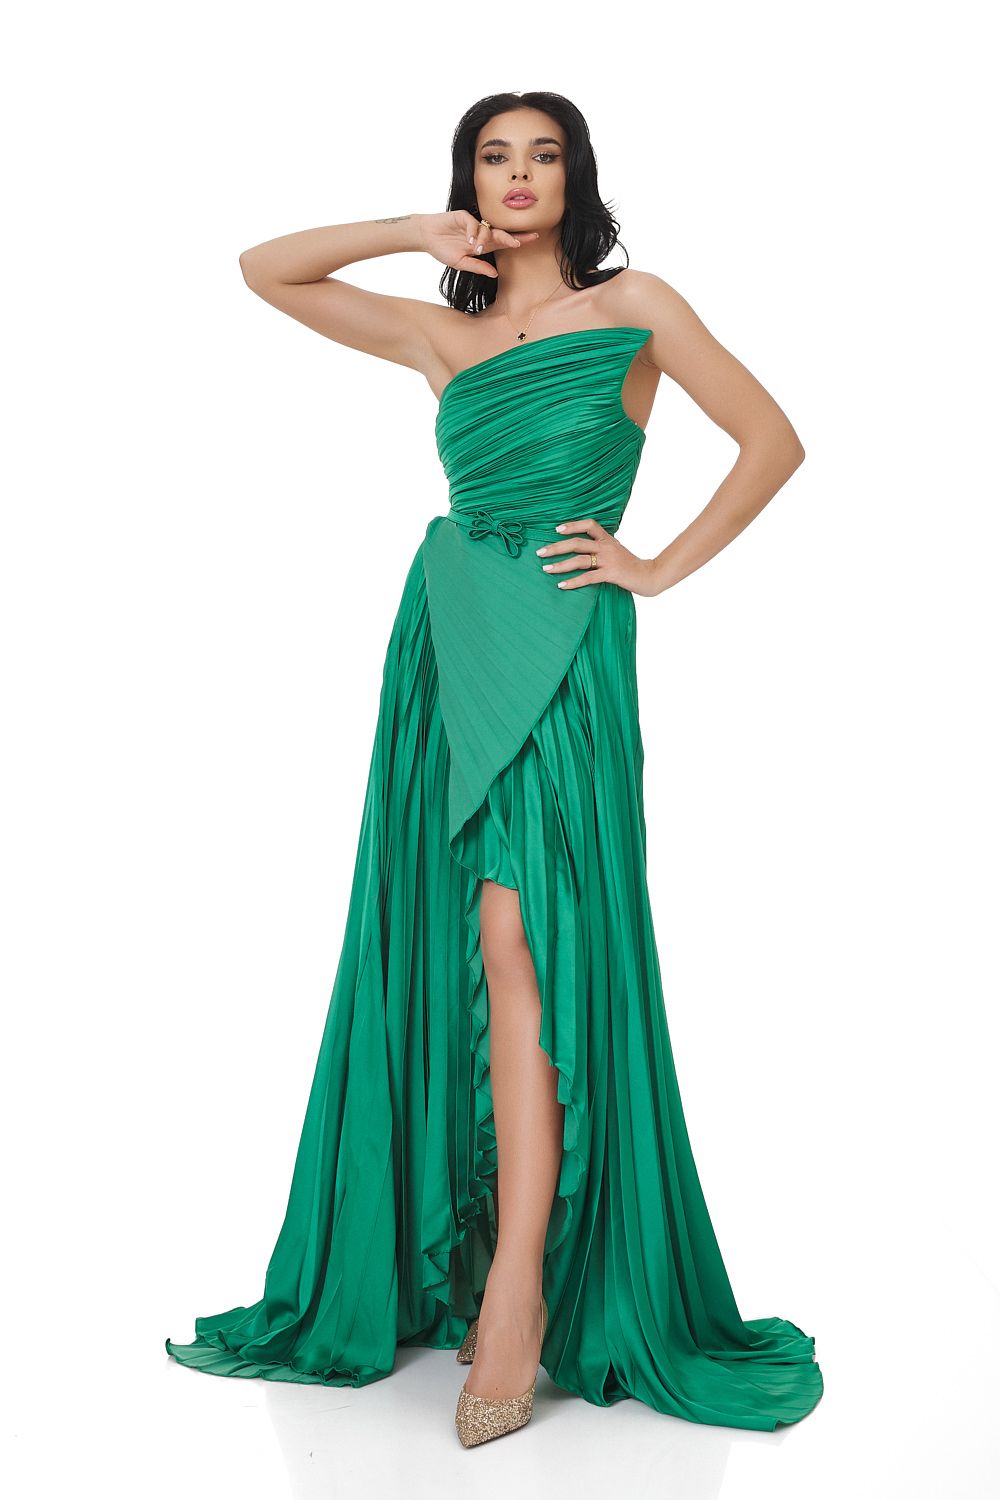 Miek Bogas hosszú zöld női ruha